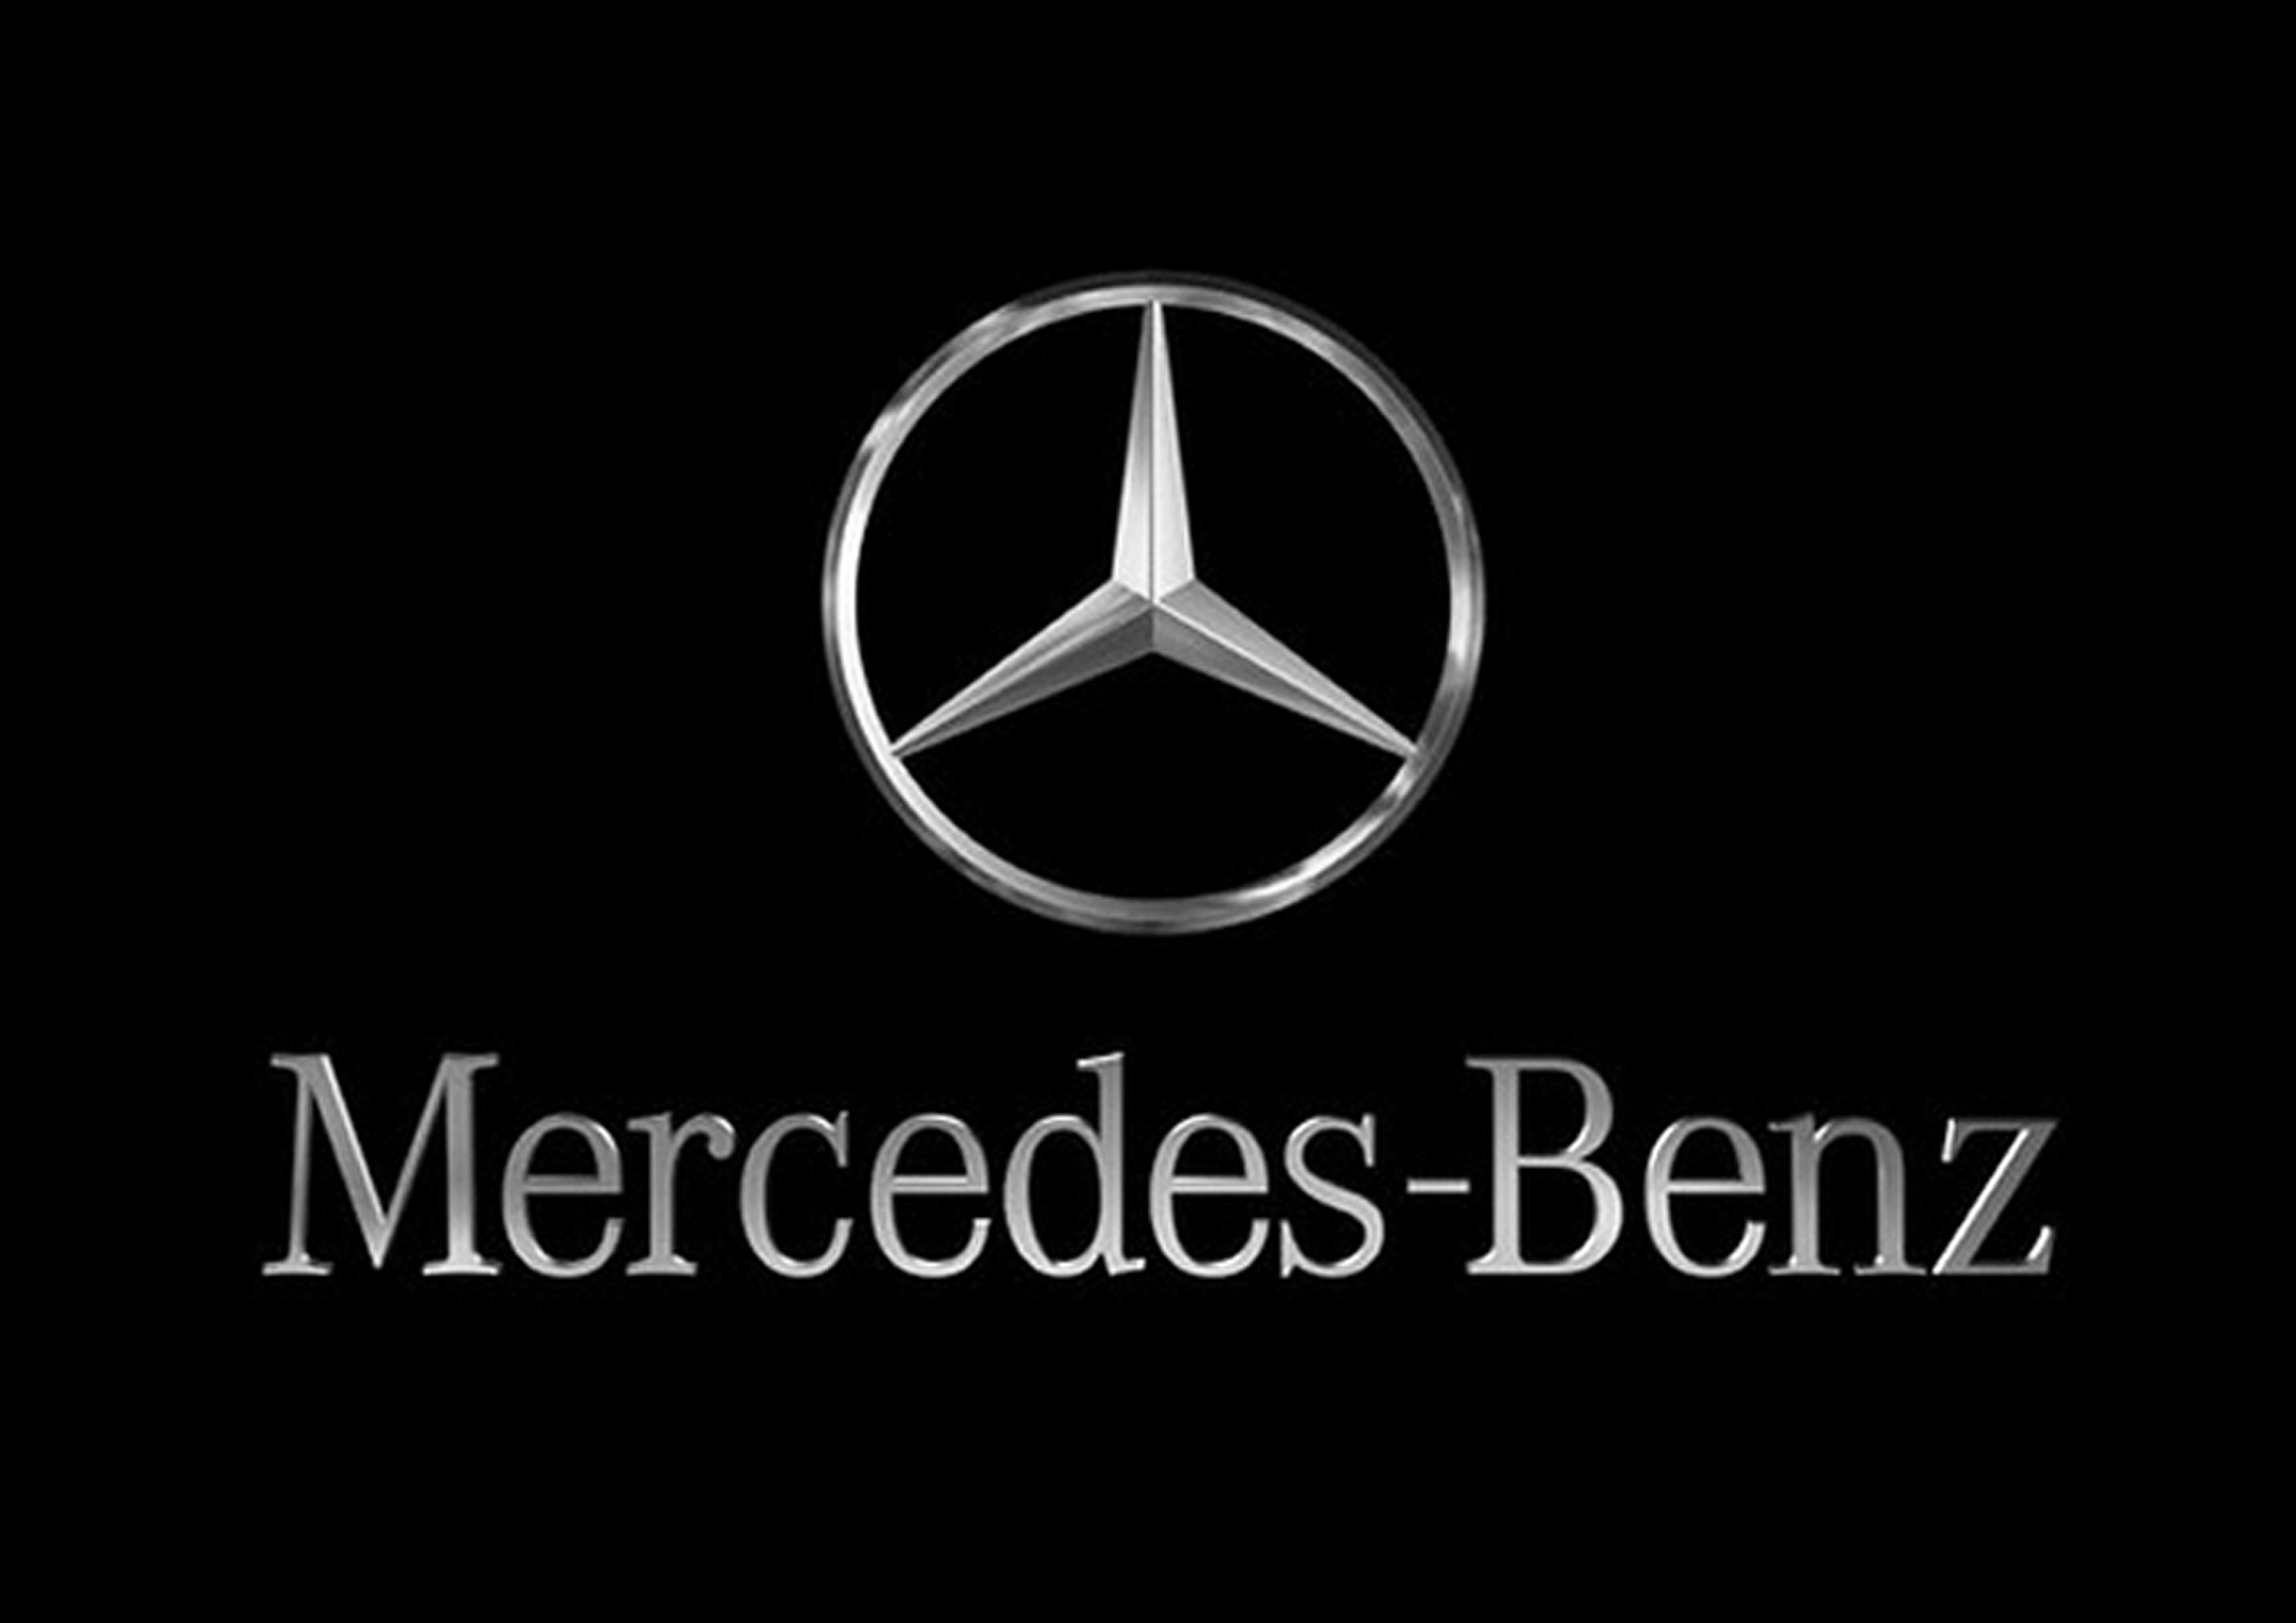 Mercedes logo wallpaper Popular Cars